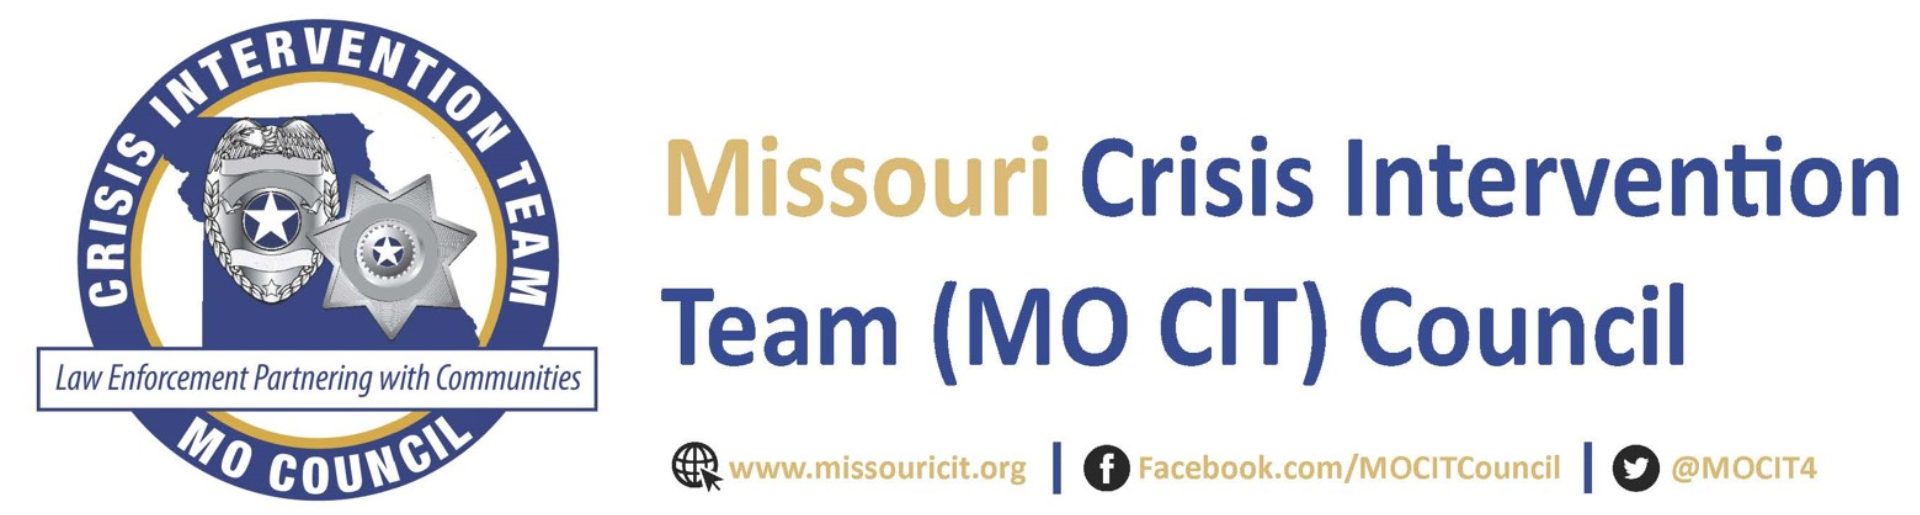 Missouri Crisis Intervention Team Council